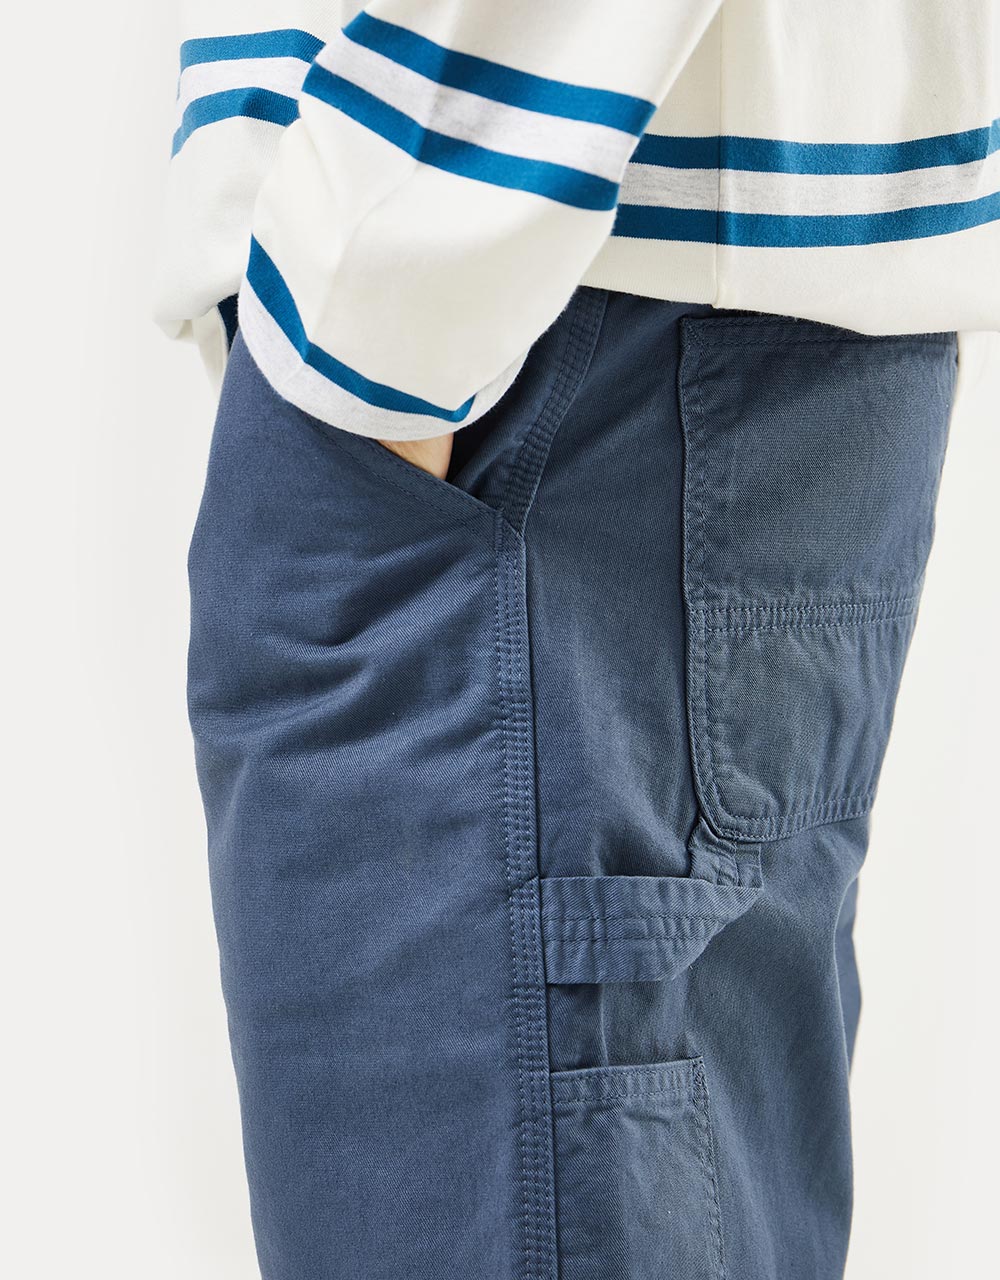 Carhartt WIP Single Knee Short - Storm Blue (Garment Dyed)